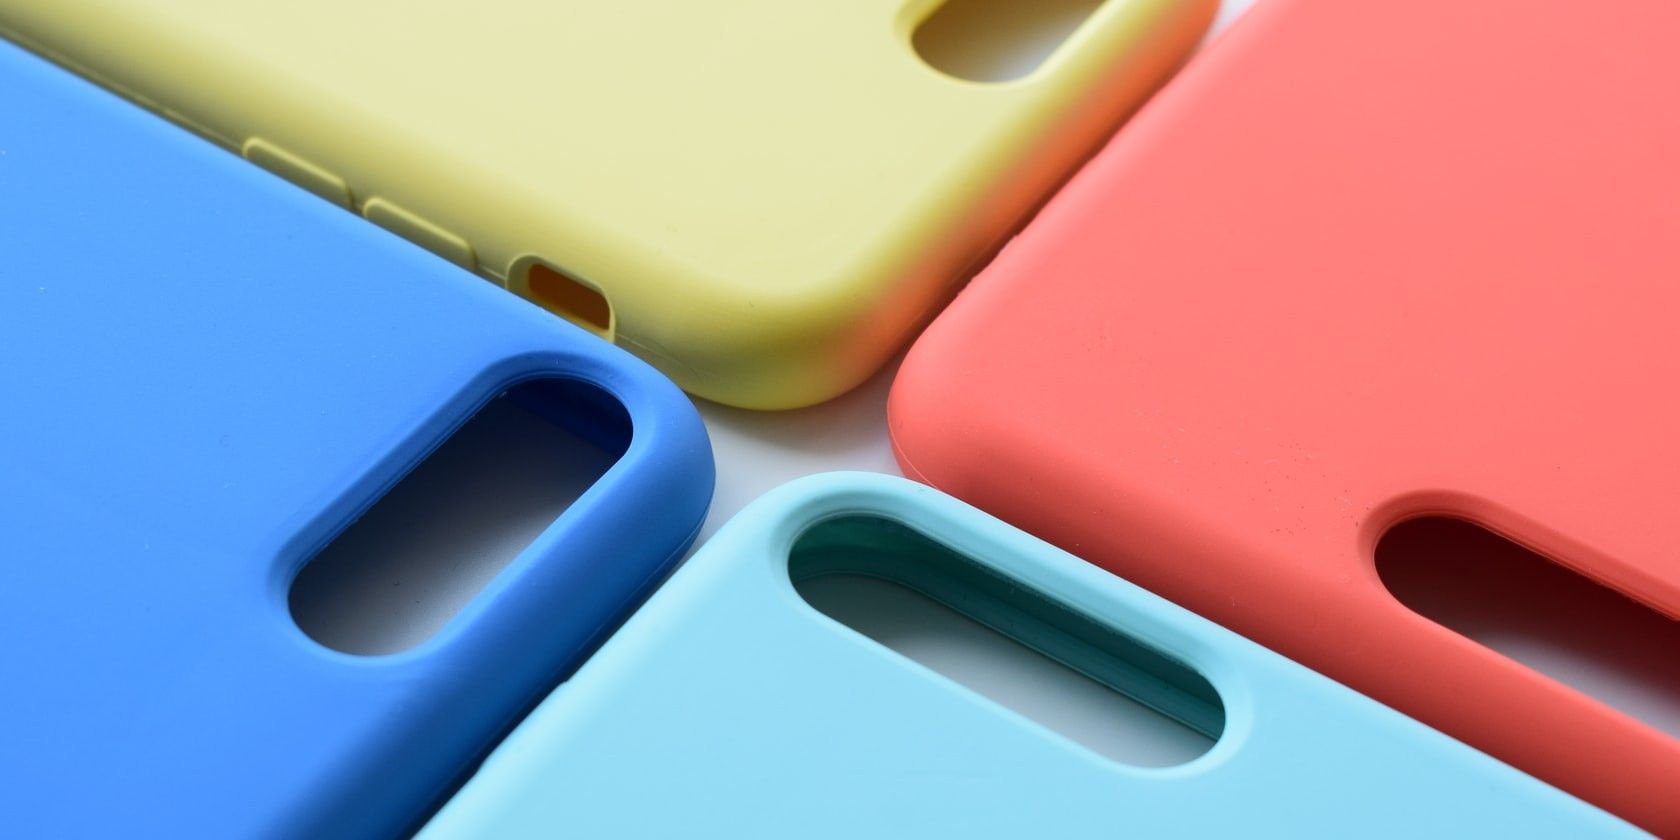 iPhone SE phone cases